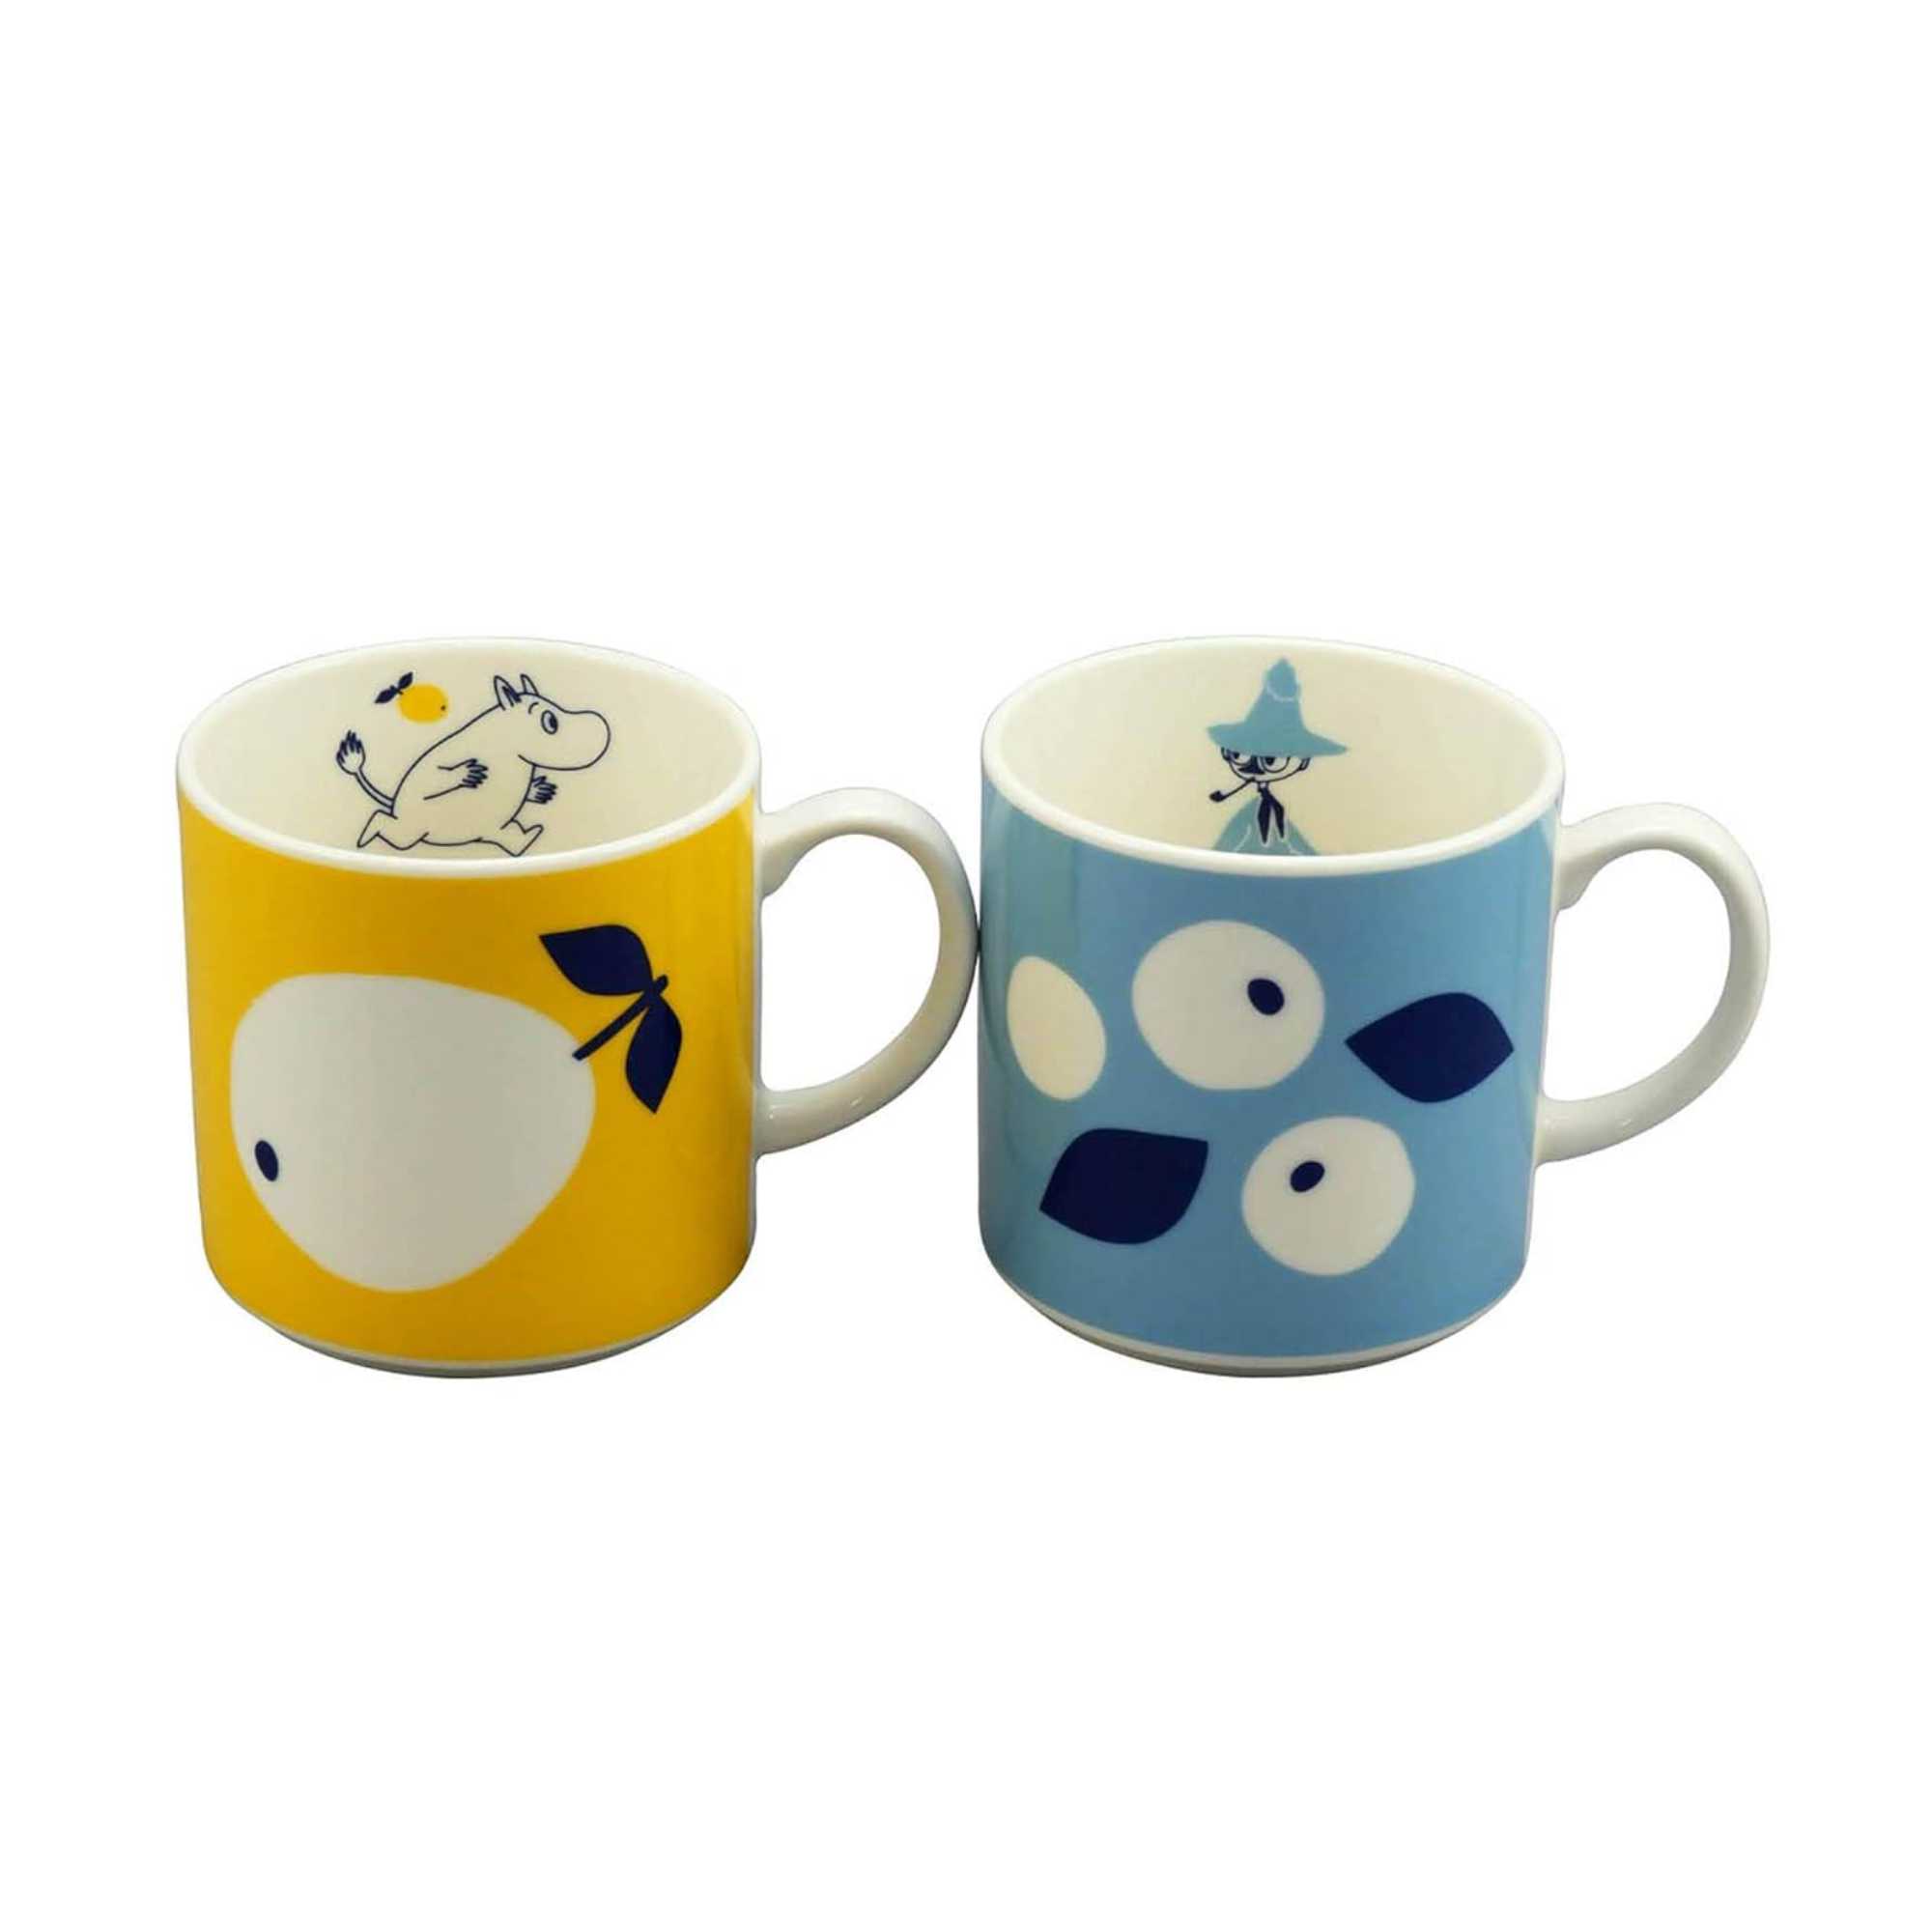 Moomin & Snafkin Porcelain Mug Set 350ml